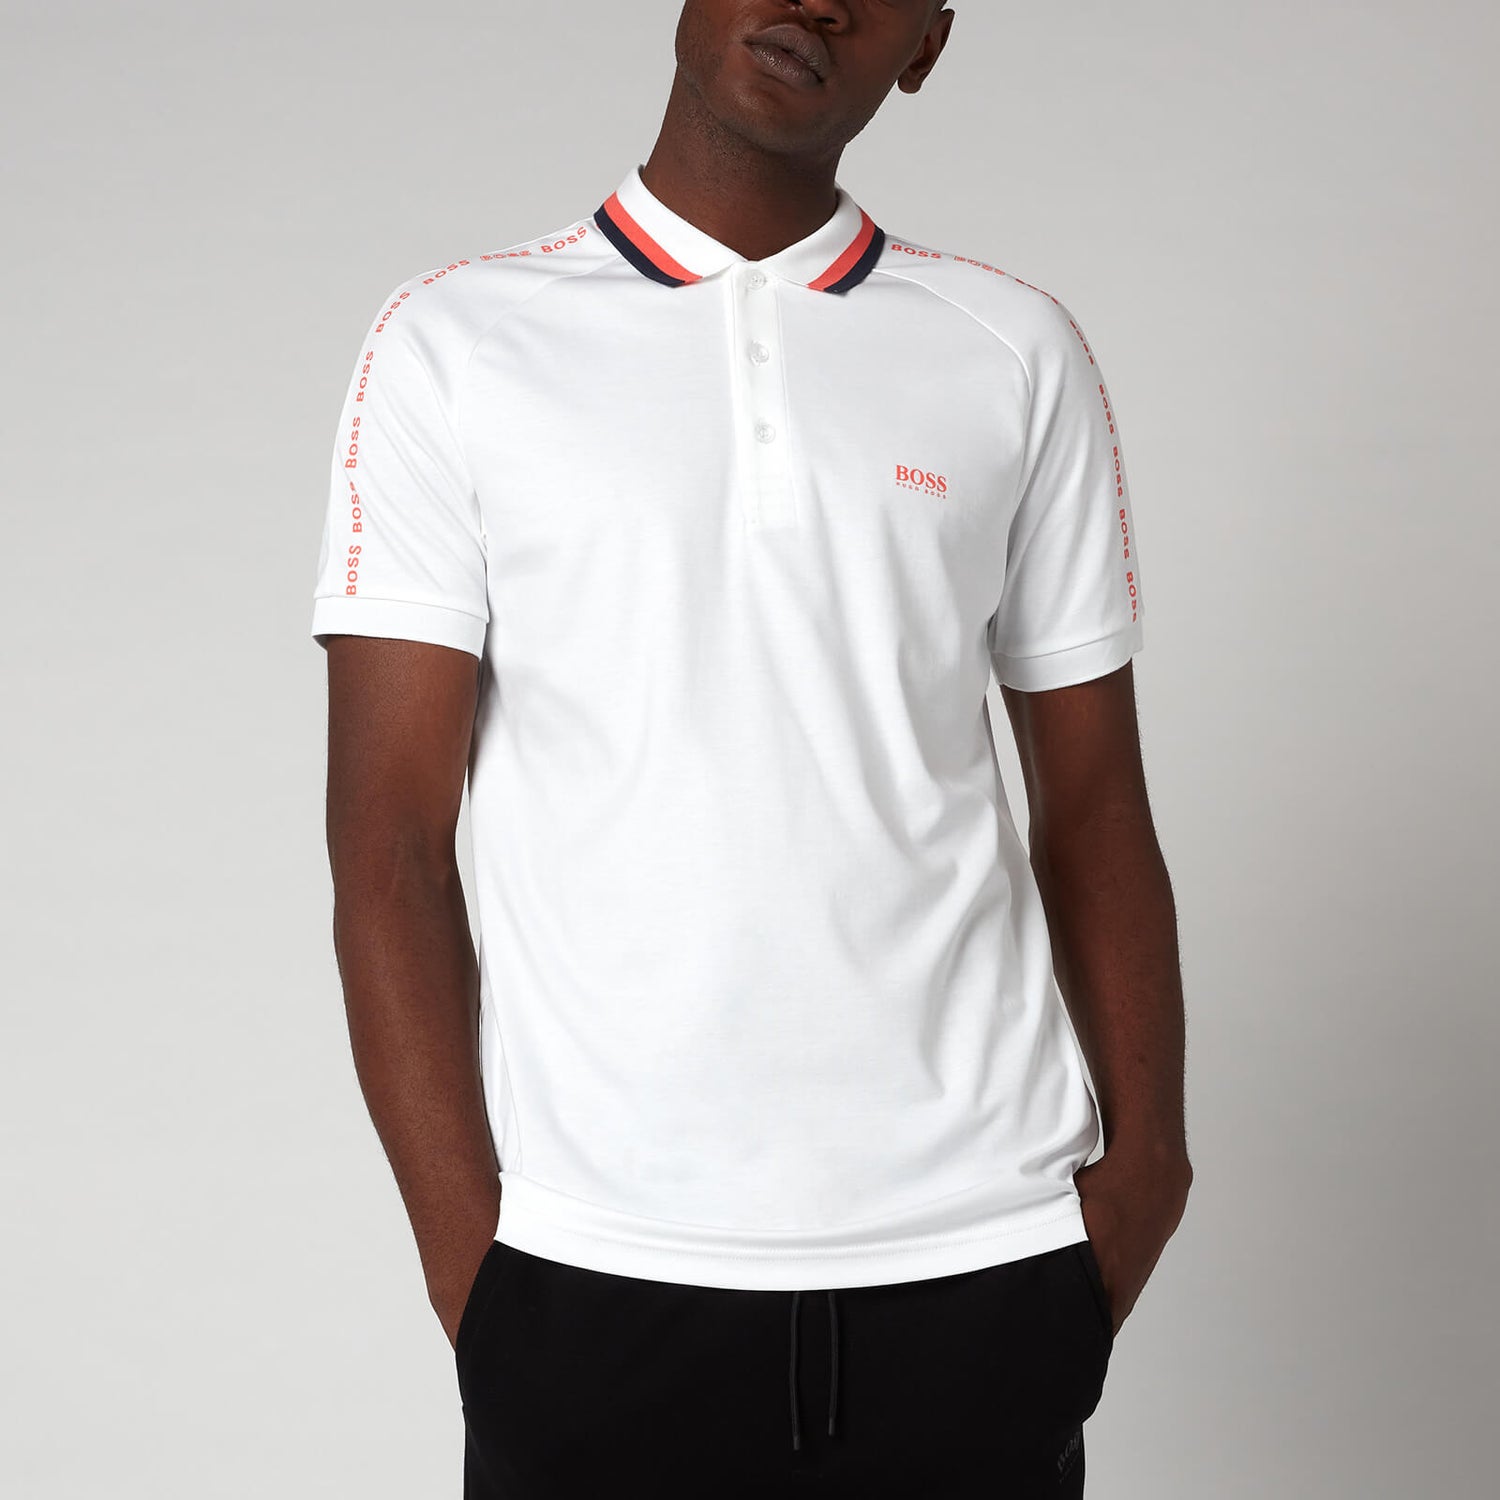 BOSS Athleisure Men's Paule 2 Polo Shirt - White